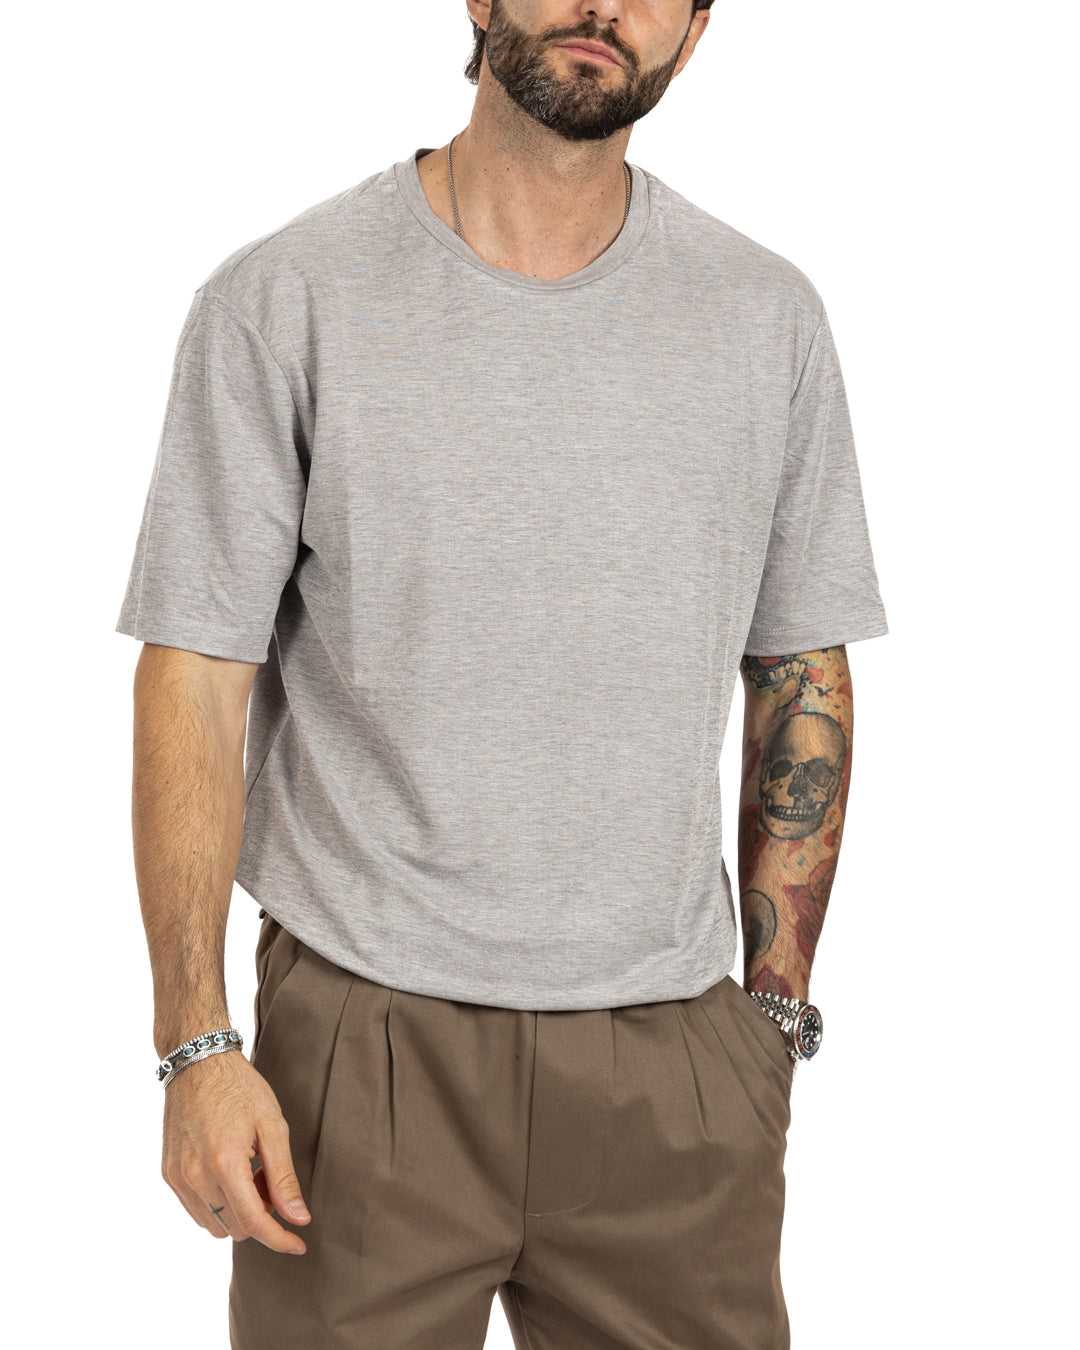 Tee - basic gray textured t-shirt